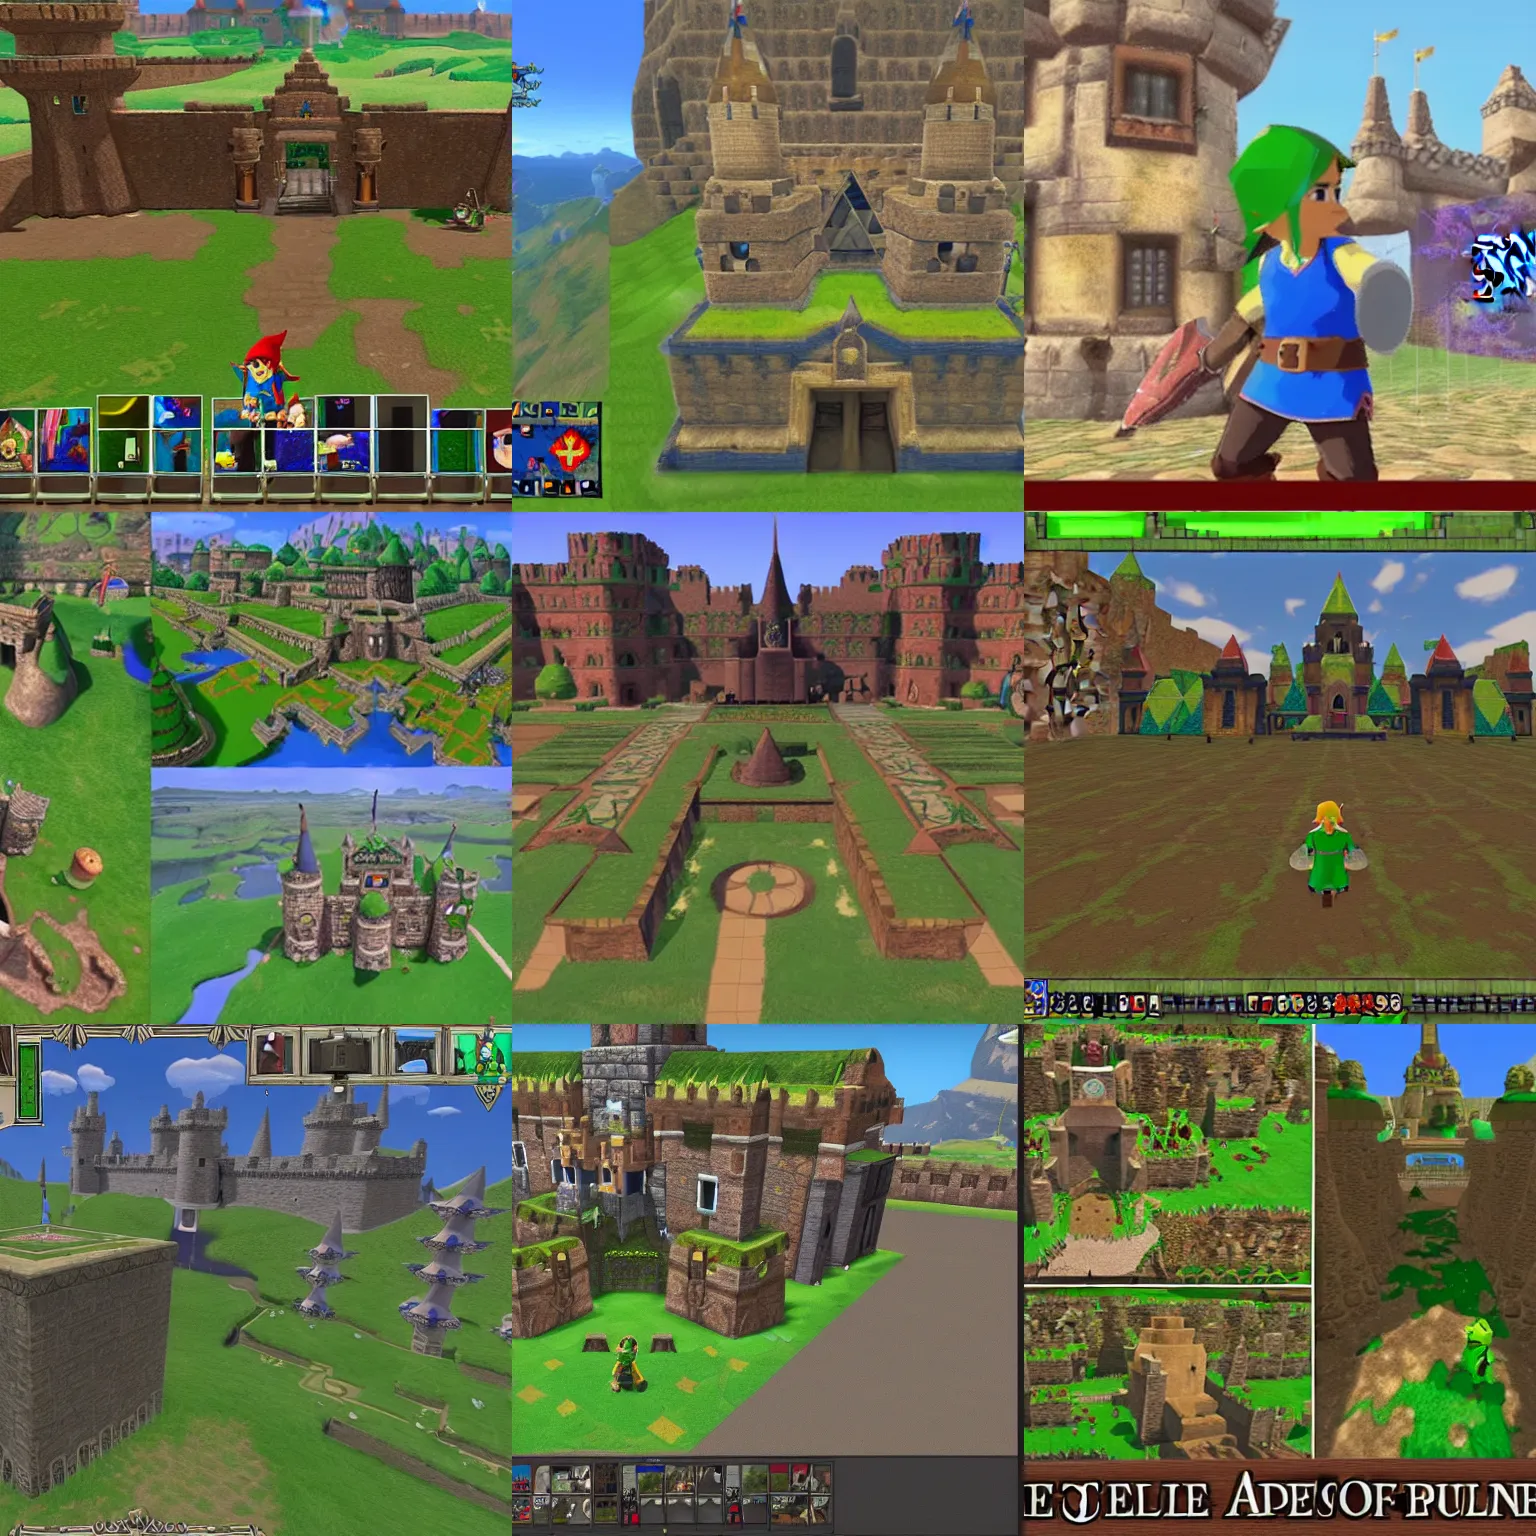 Prompt: Legend of Zelda Hyrule Castle google street view